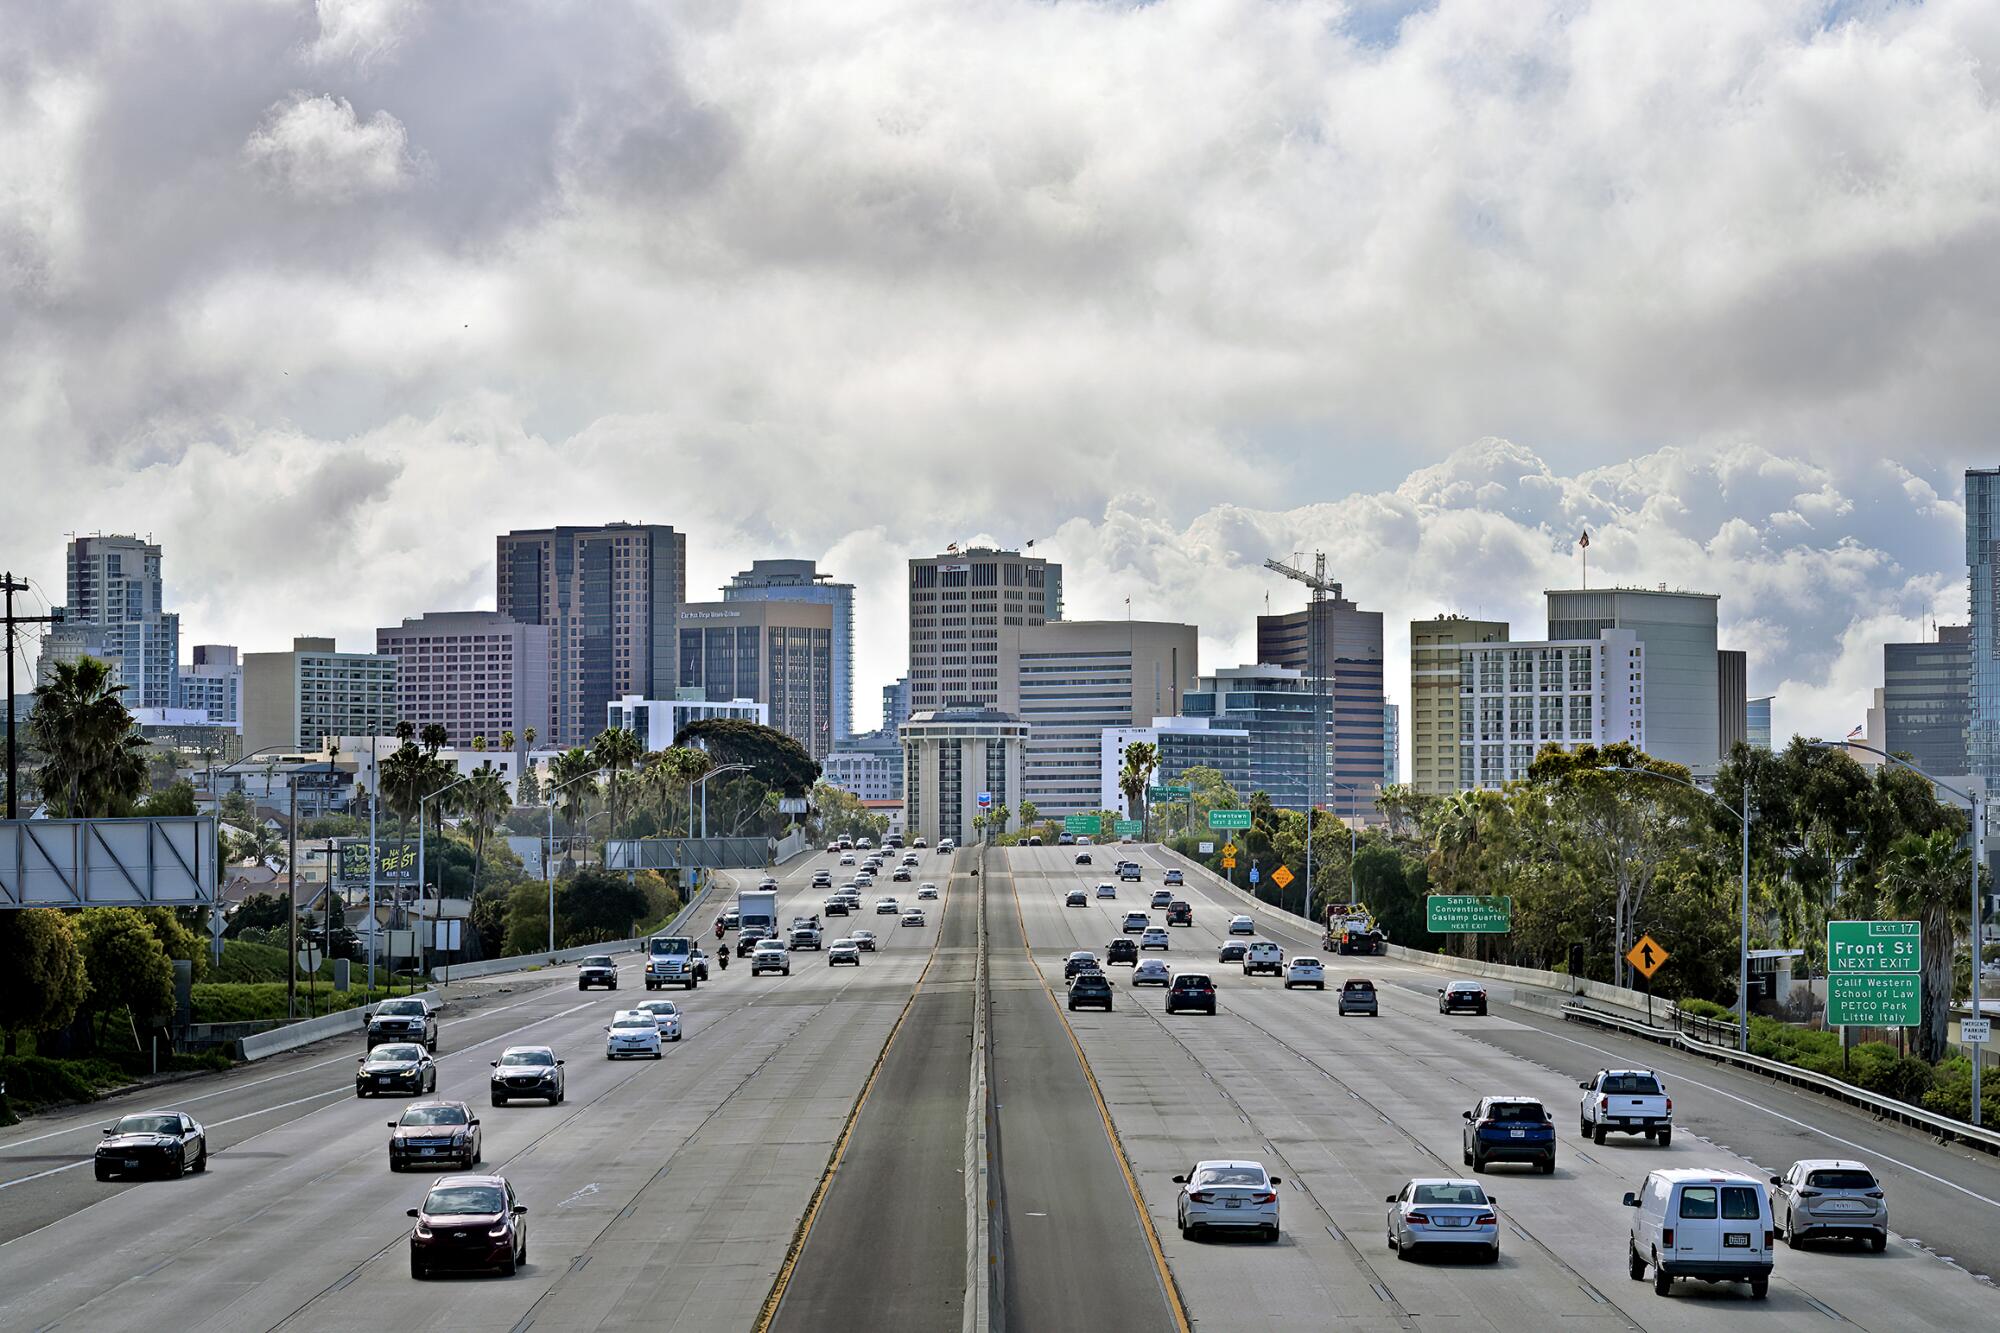 San Diego skyline in March.